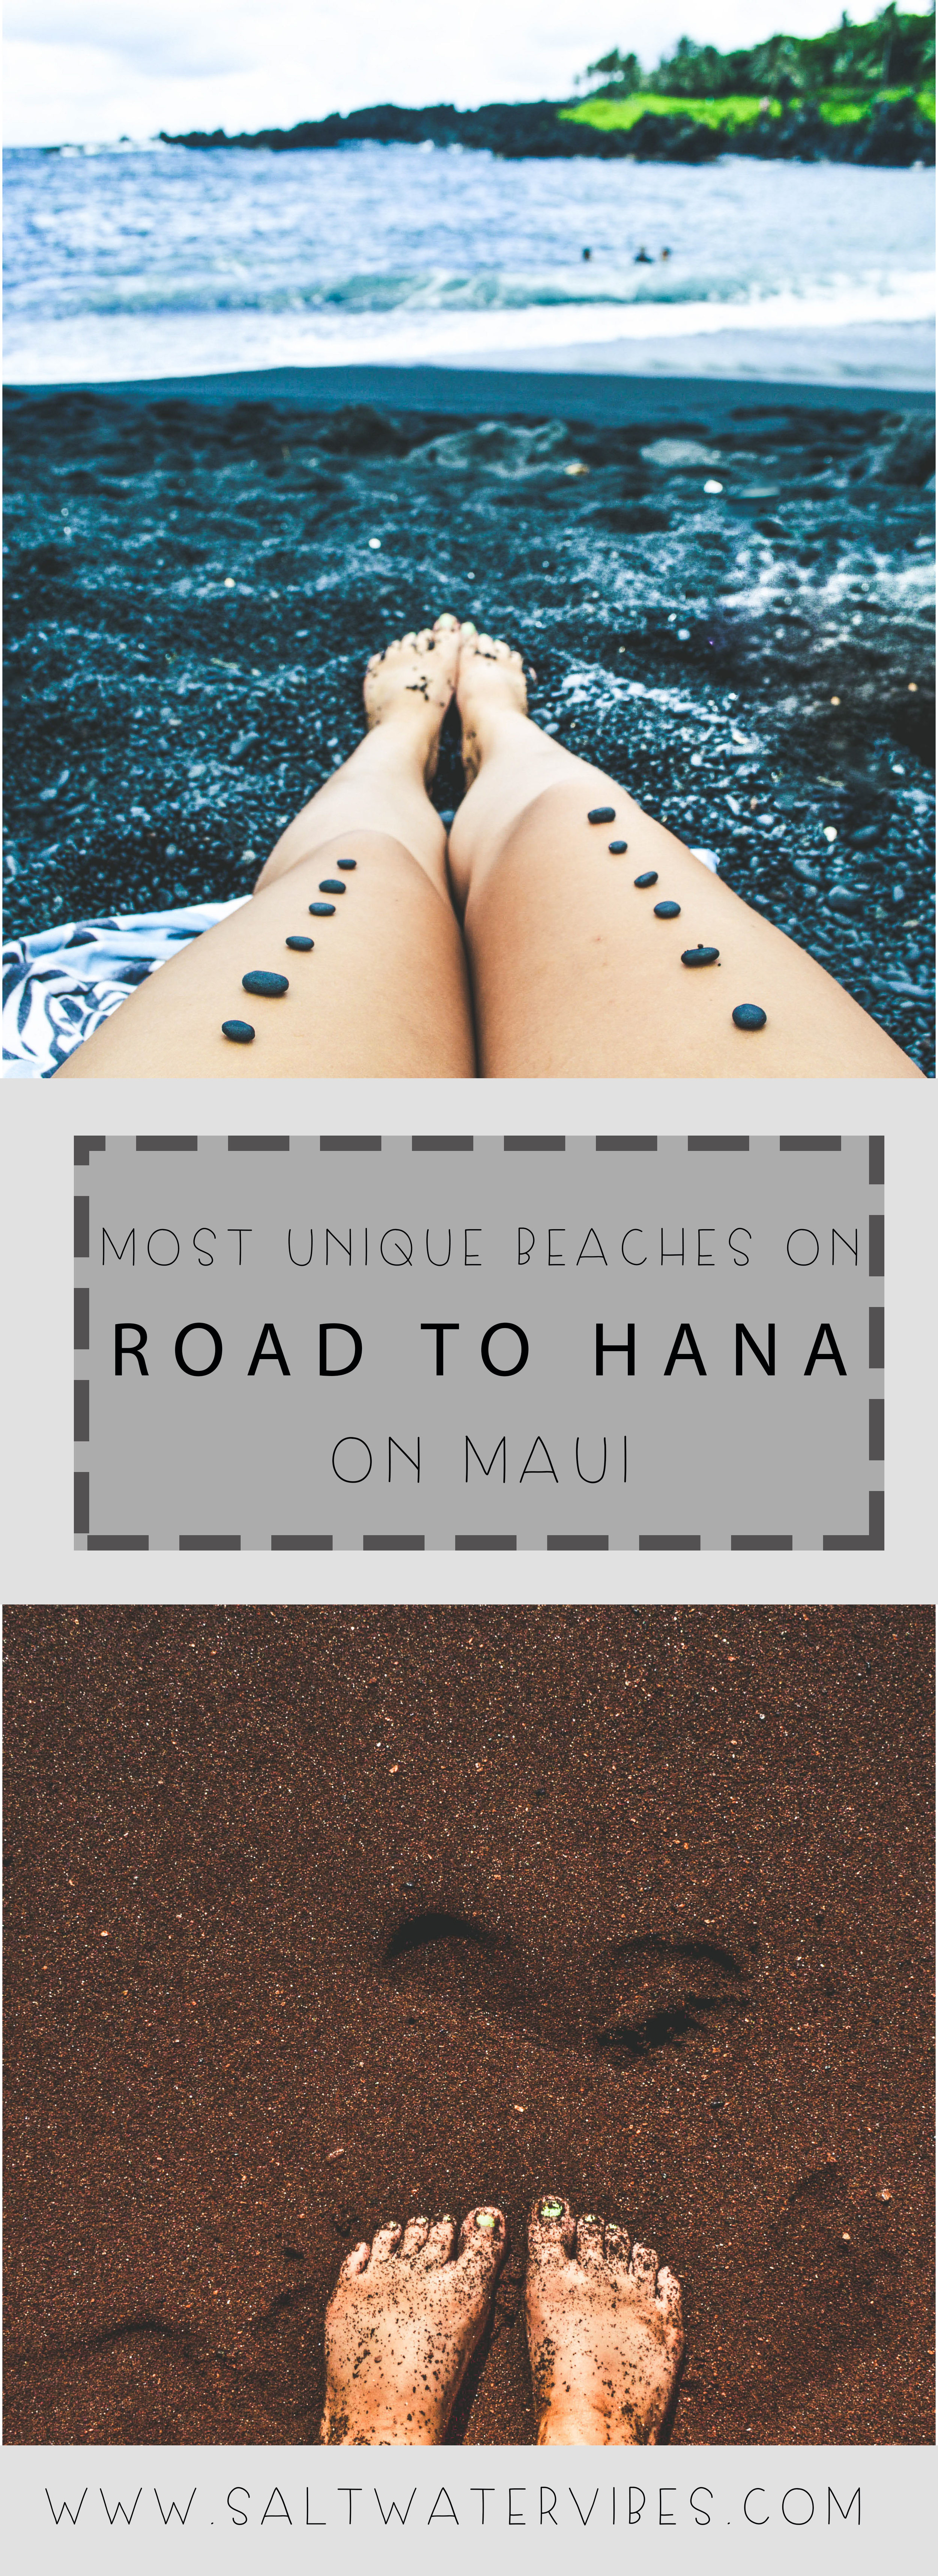 Road To Hana + SaltWaterVibes